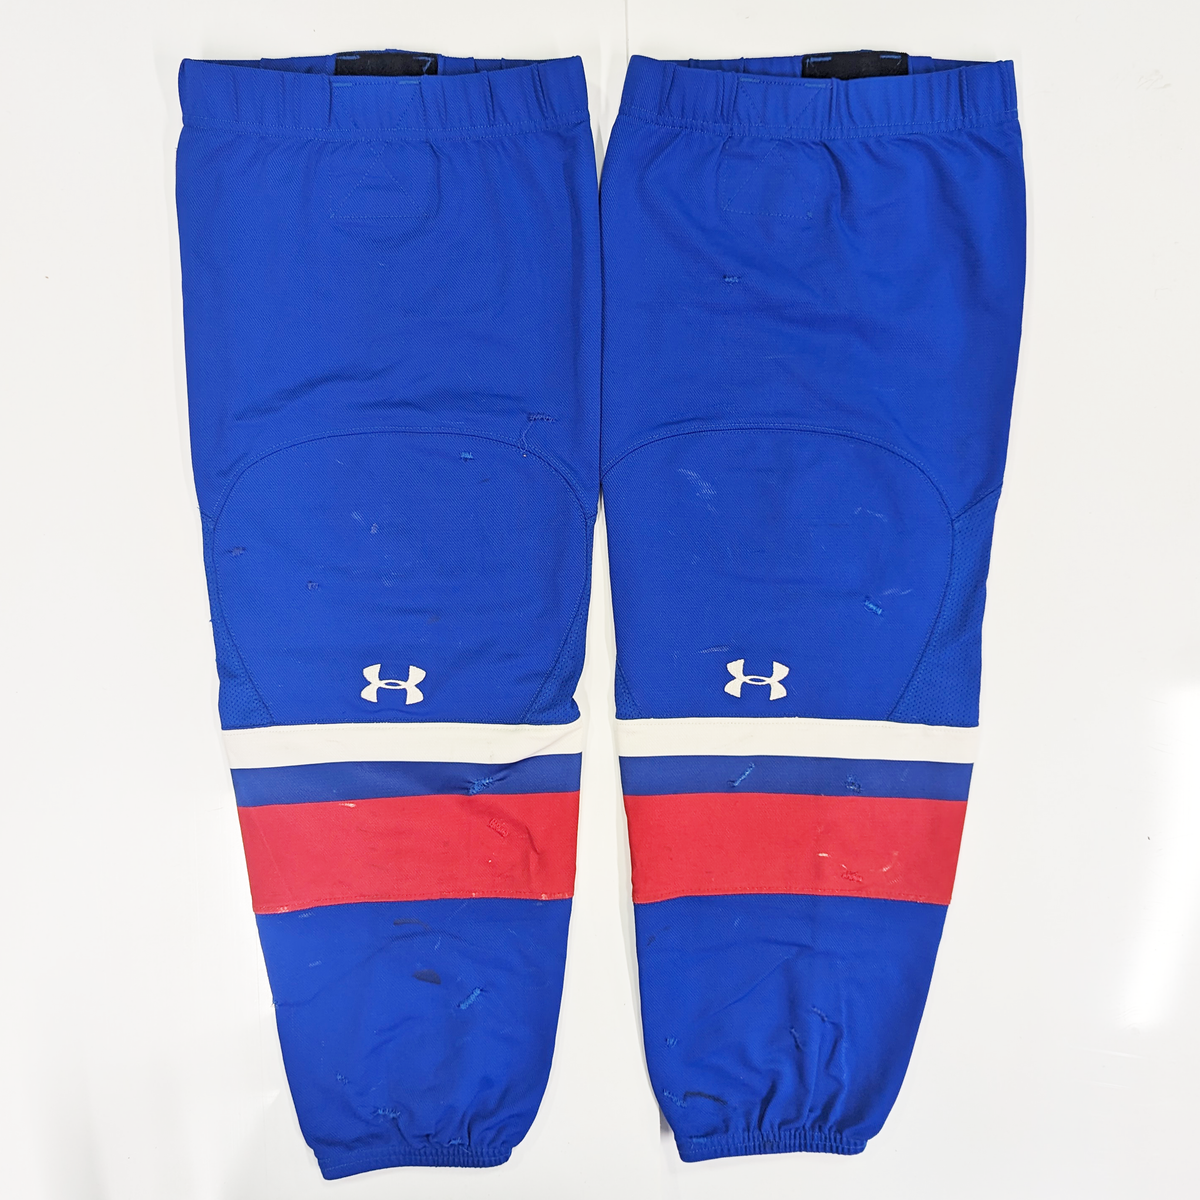 NCAA - Used Under Armour Hockey Socks (Blue/White/Red